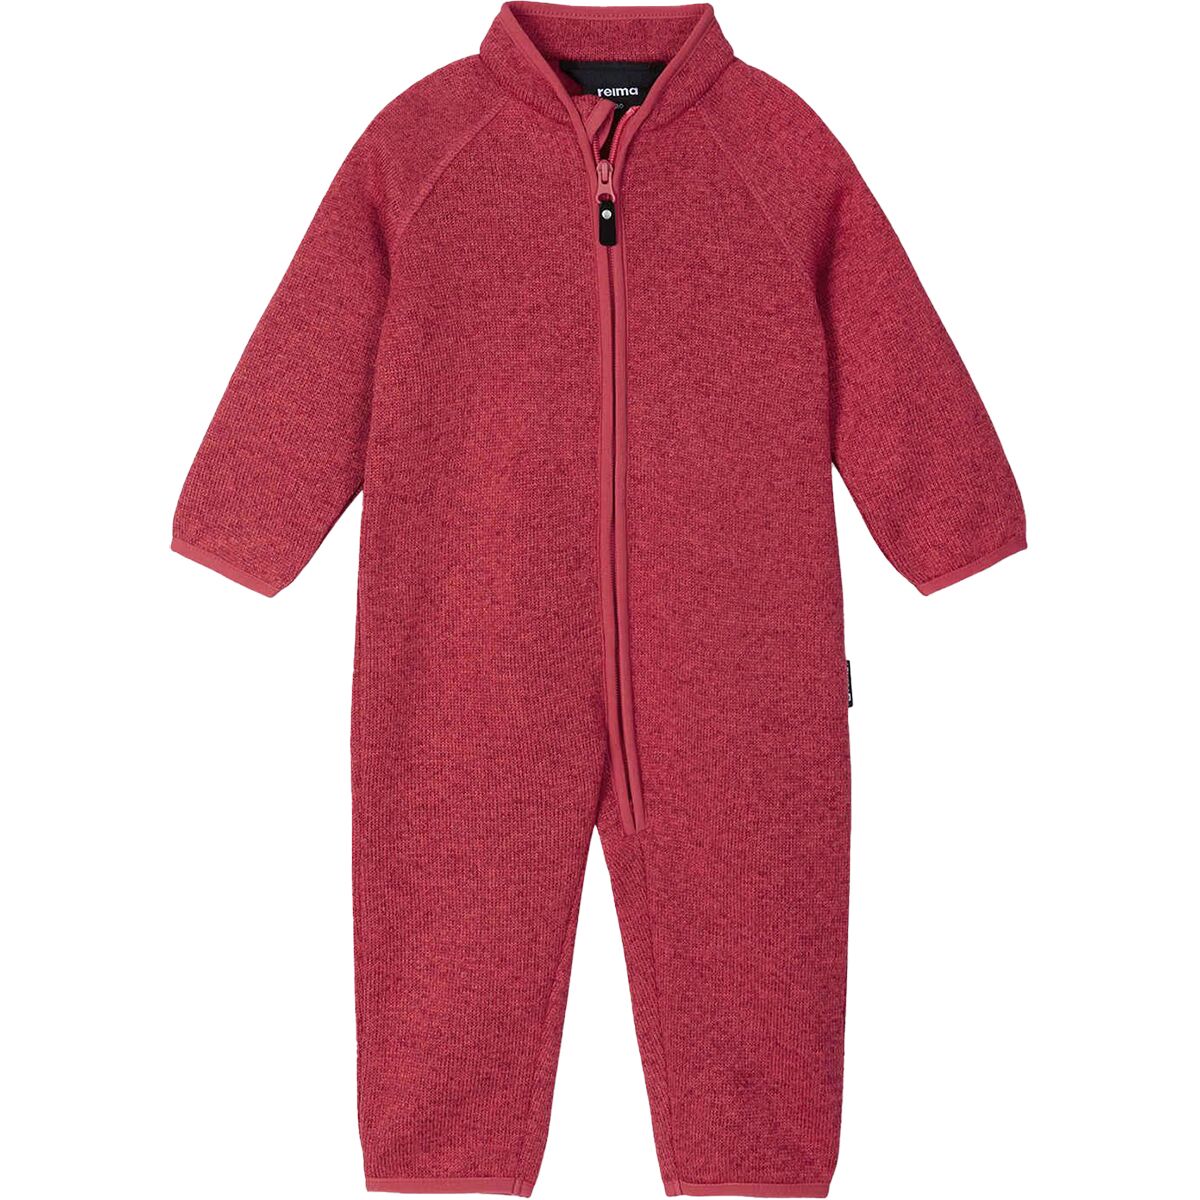 Reima Tahti Fleece Overall - Infants'